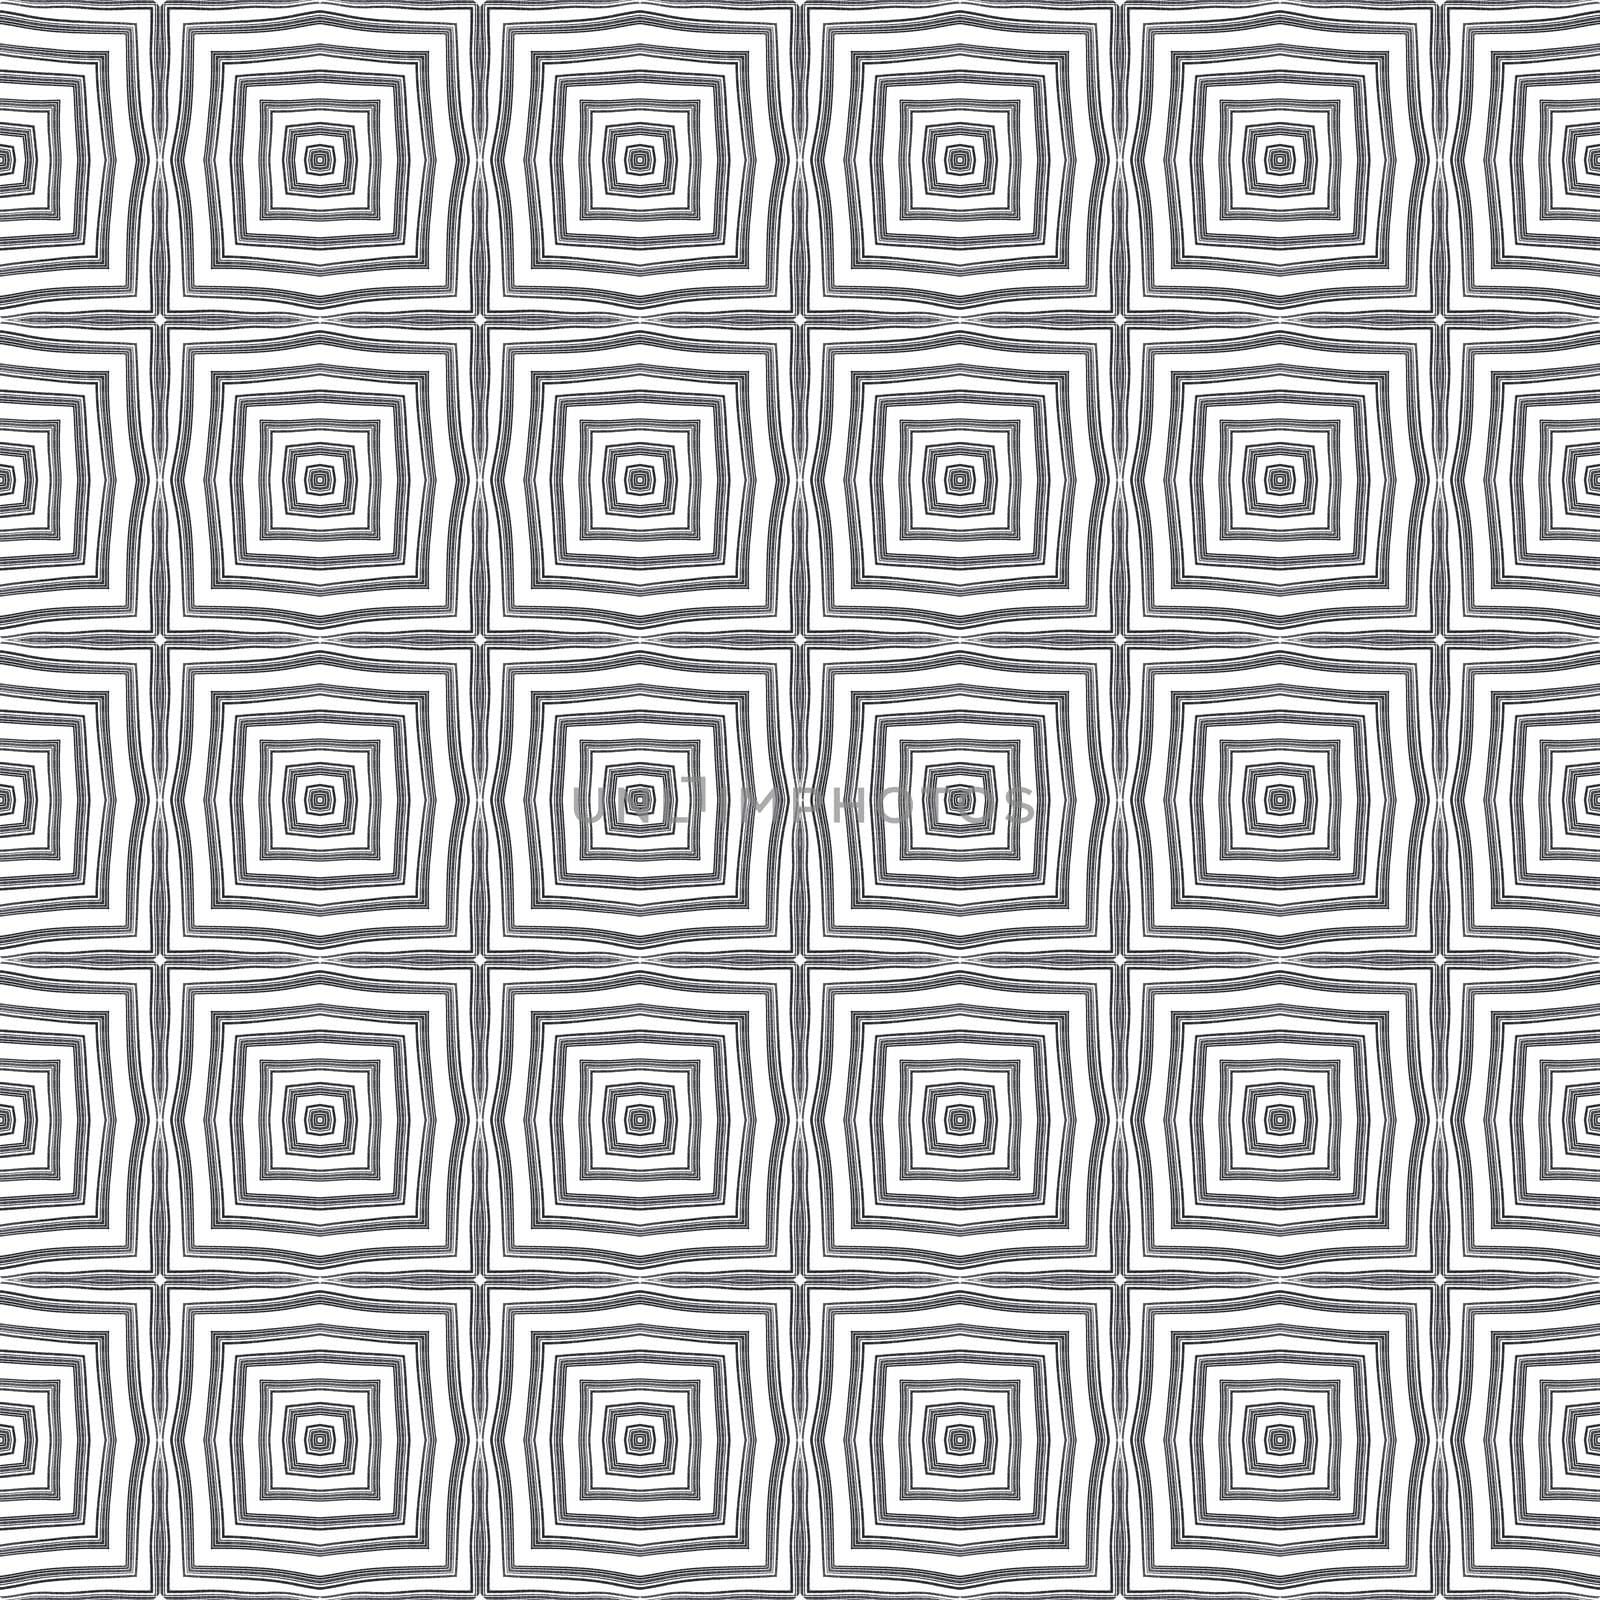 Striped hand drawn pattern. Black symmetrical kaleidoscope background. Textile ready fabulous print, swimwear fabric, wallpaper, wrapping. Repeating striped hand drawn tile.